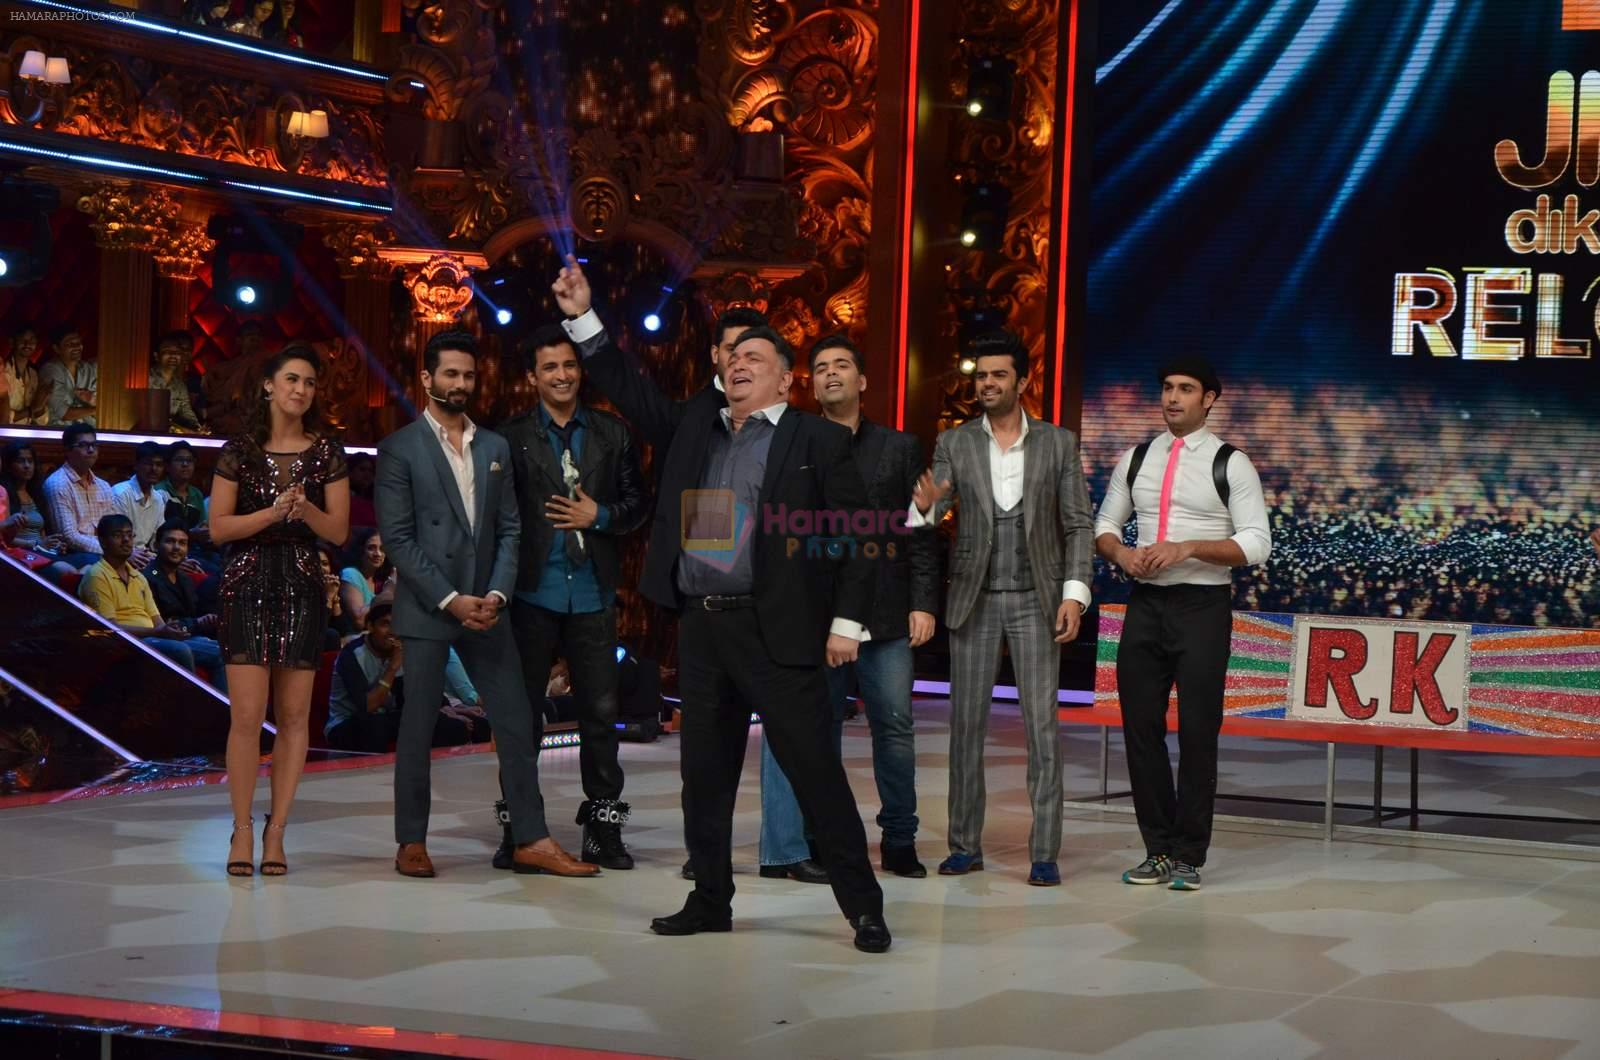 Abhishek Bachchan and Rishi Kapoor on the sets of Jhalak Dikhlaajaa on 5th Aug 2015